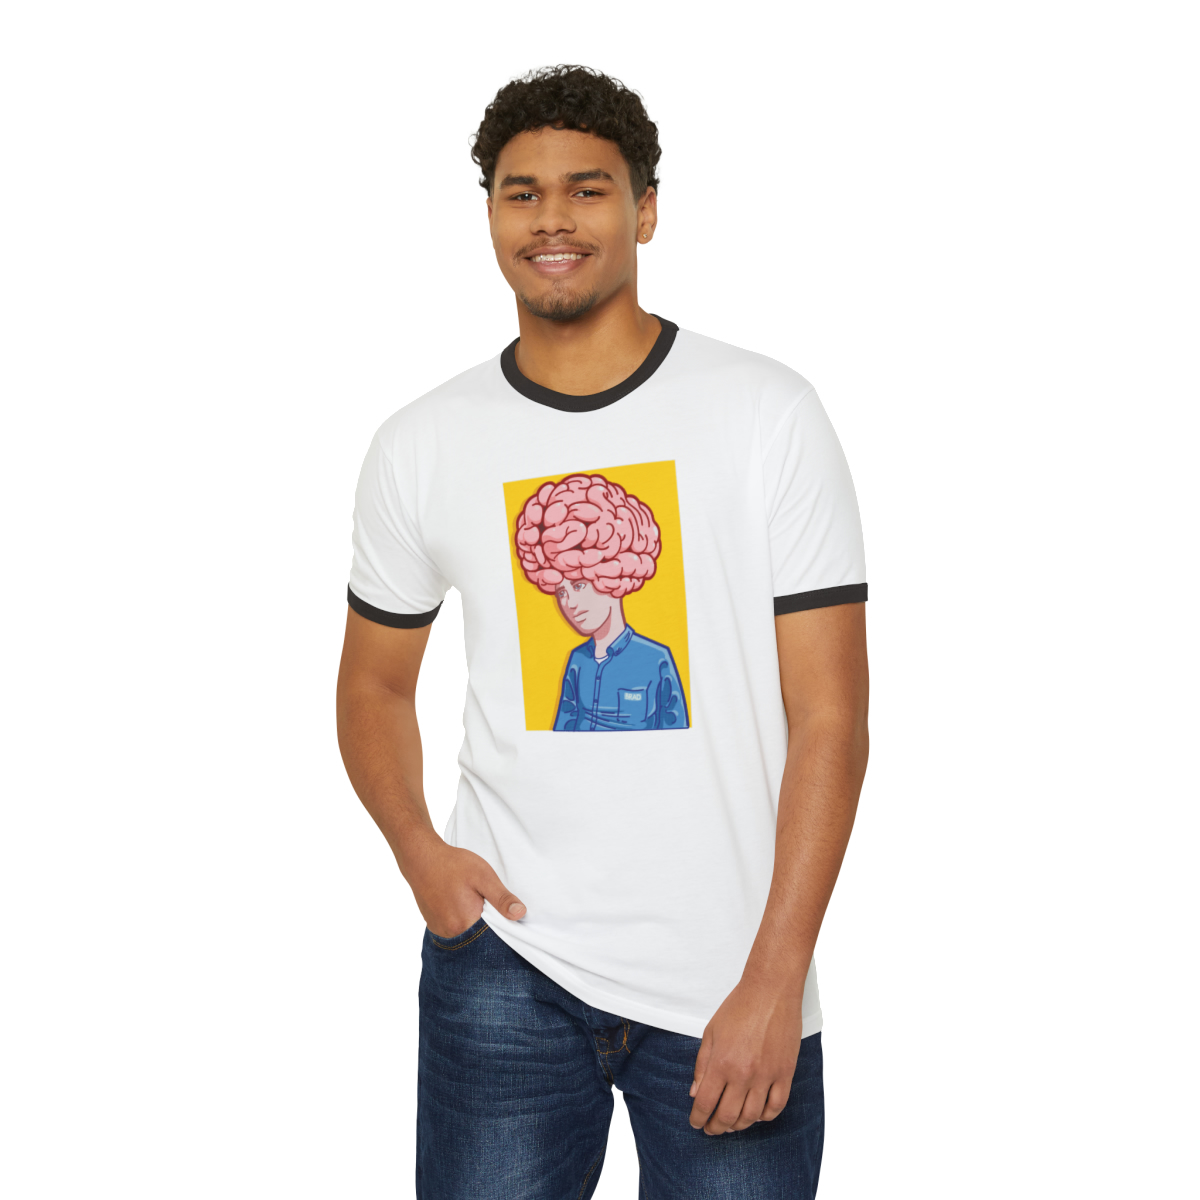 Big Brain - Unisex Cotton Ringer T-Shirt